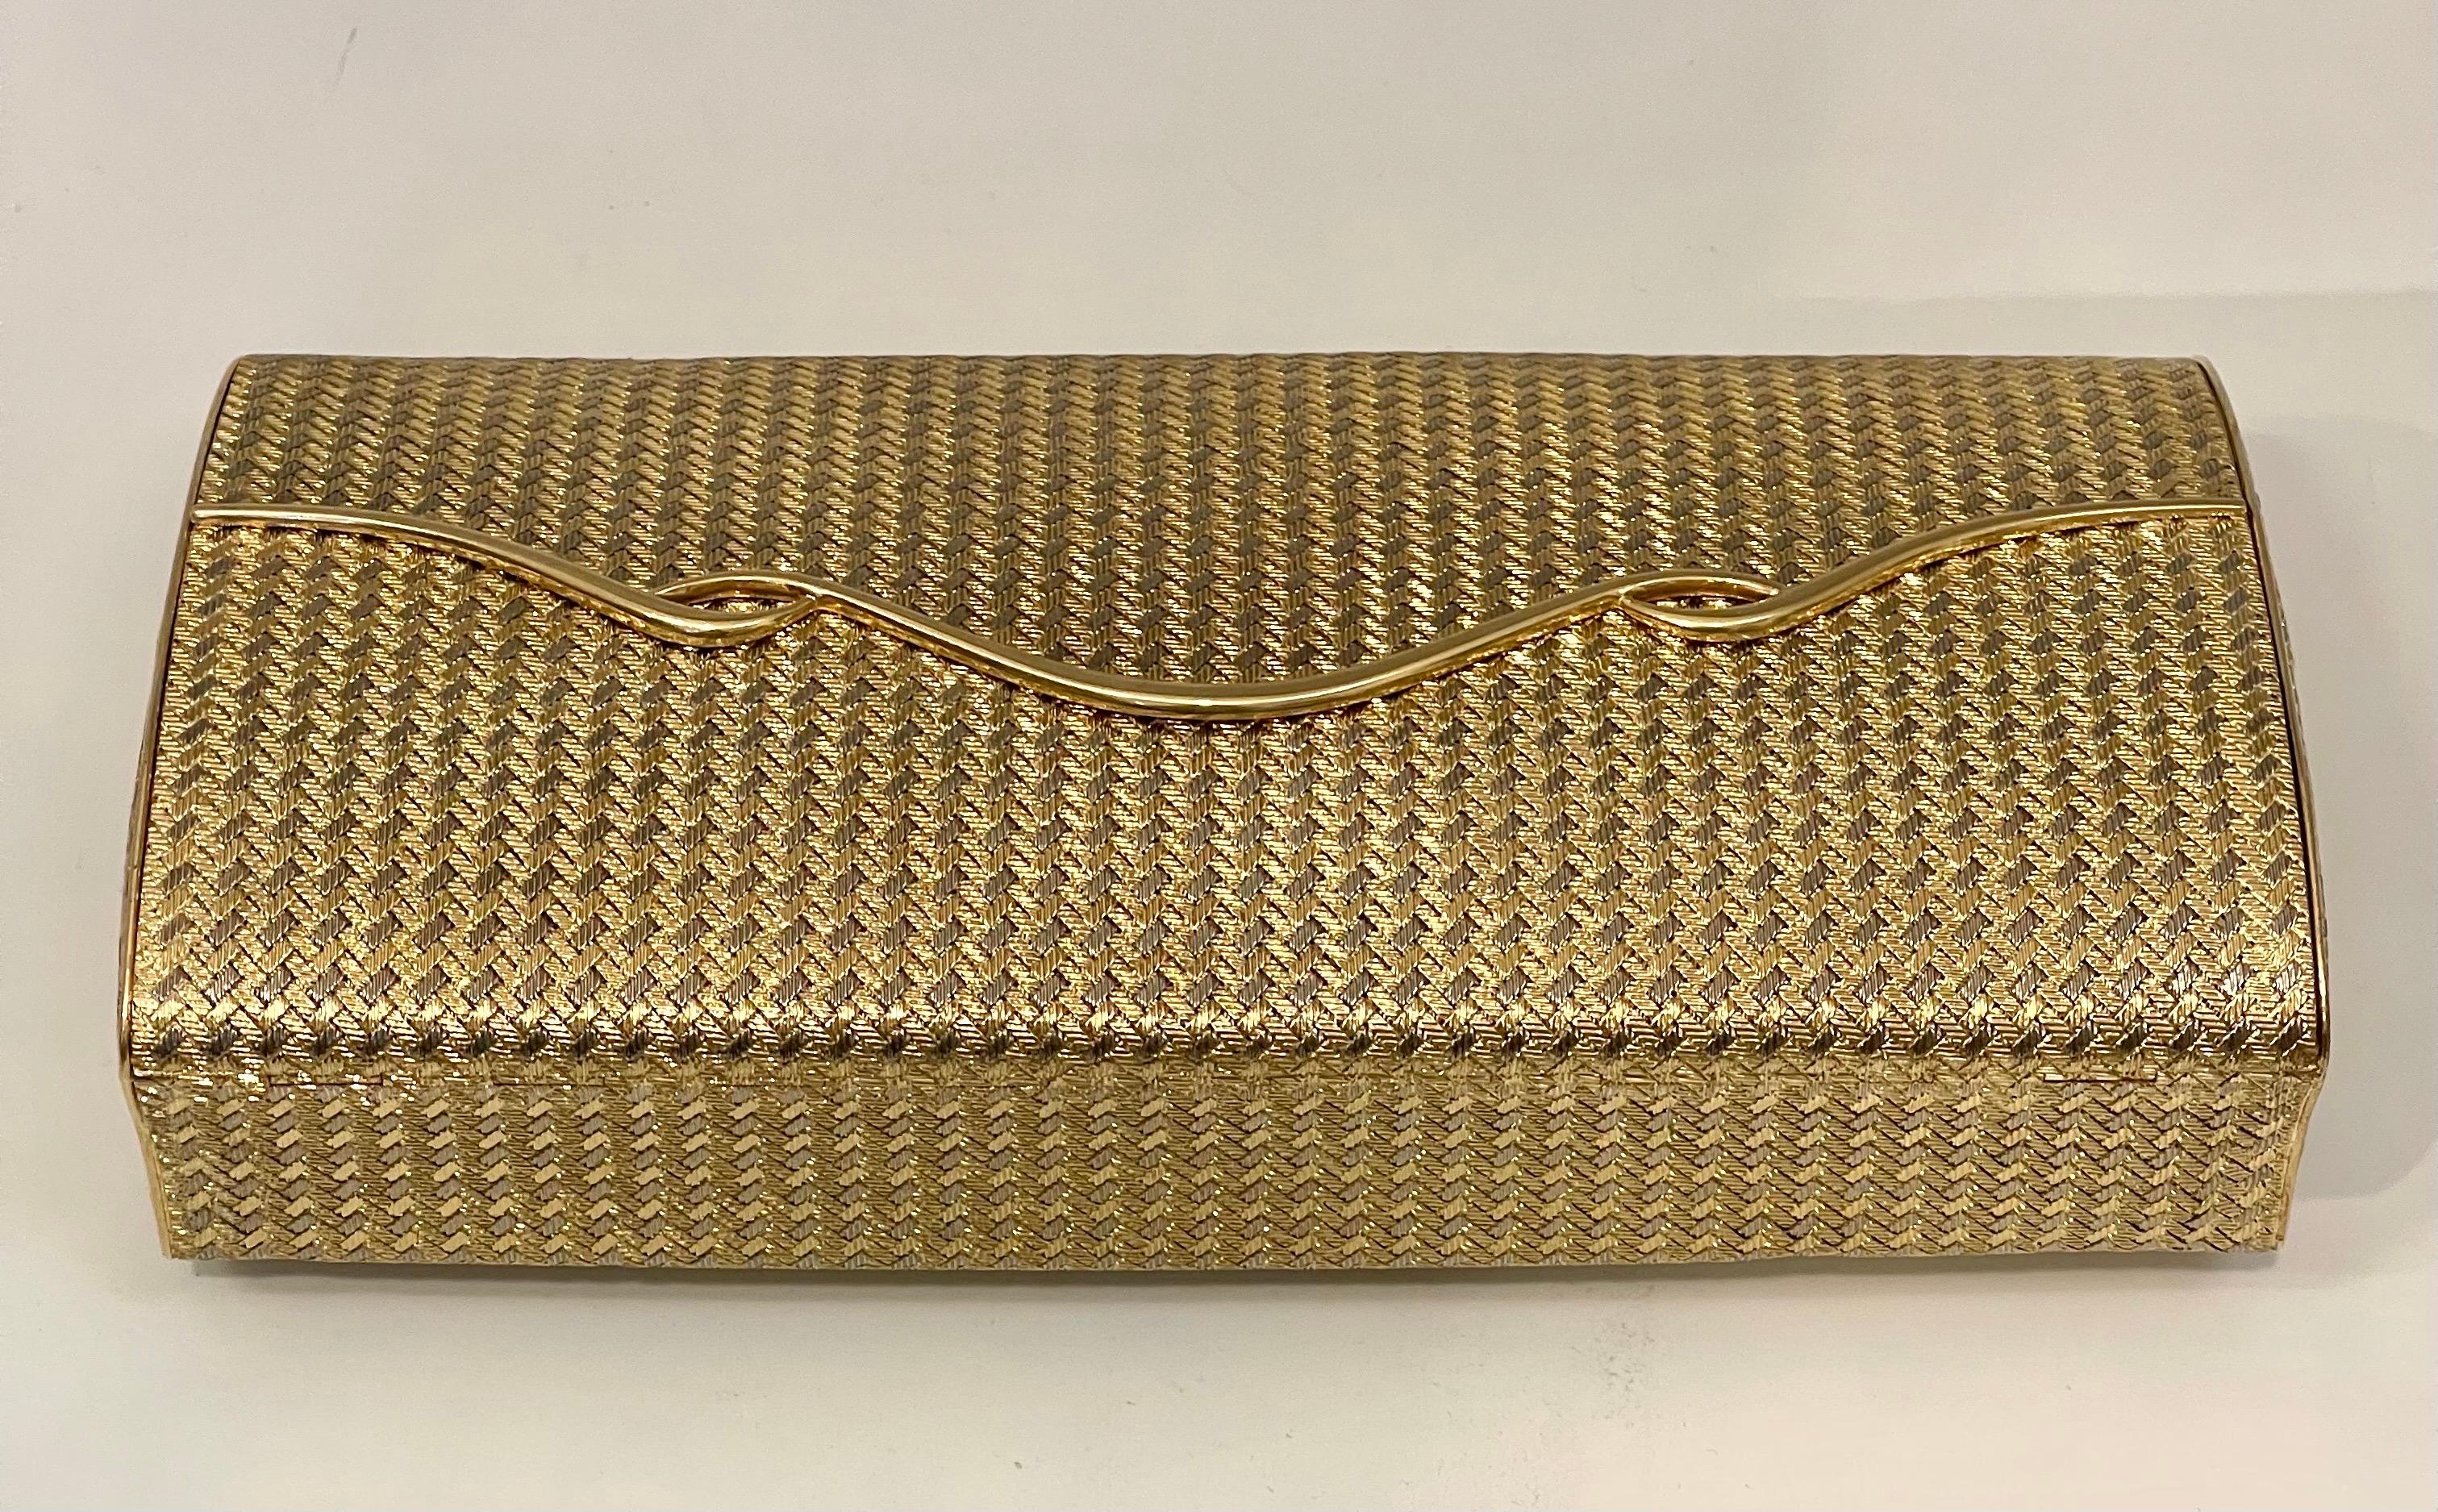 Van Cleef & Arpels 18K Yellow Gold Mesh Clutch Handbag with Mirror Inside, Rare For Sale 3